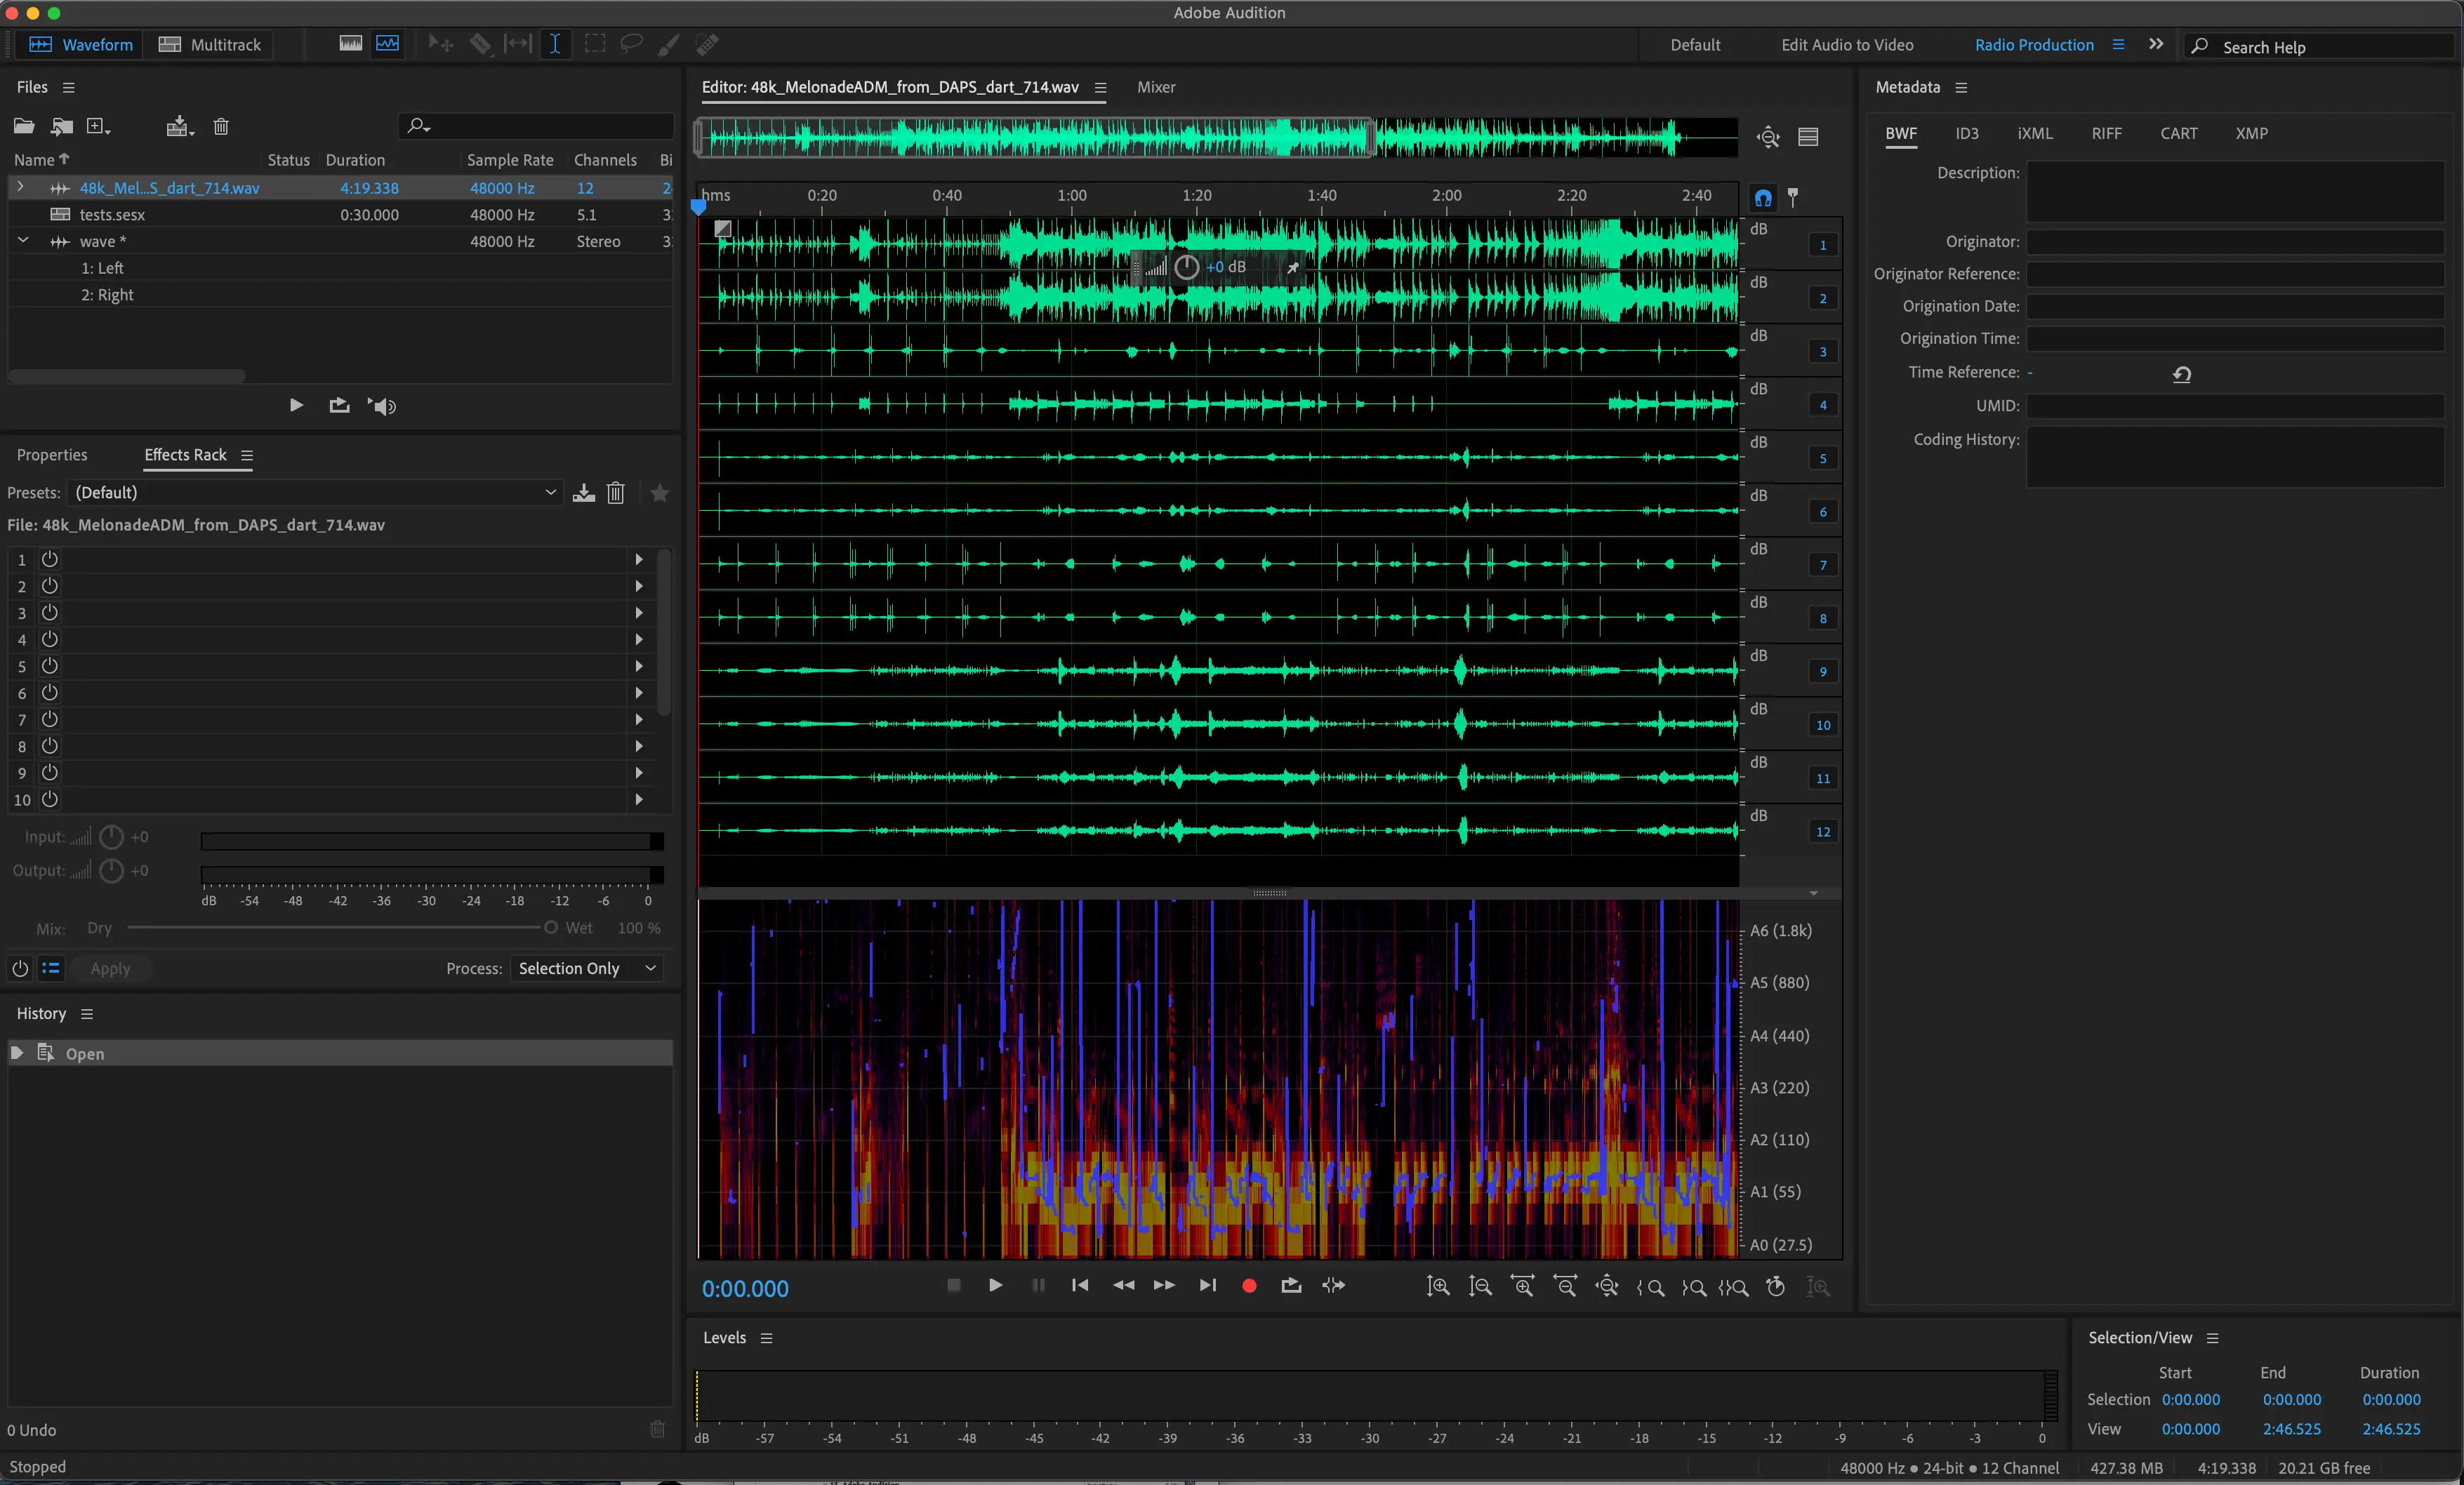 Adobe Audition Golfvormweergave met spectrumanalyse. 